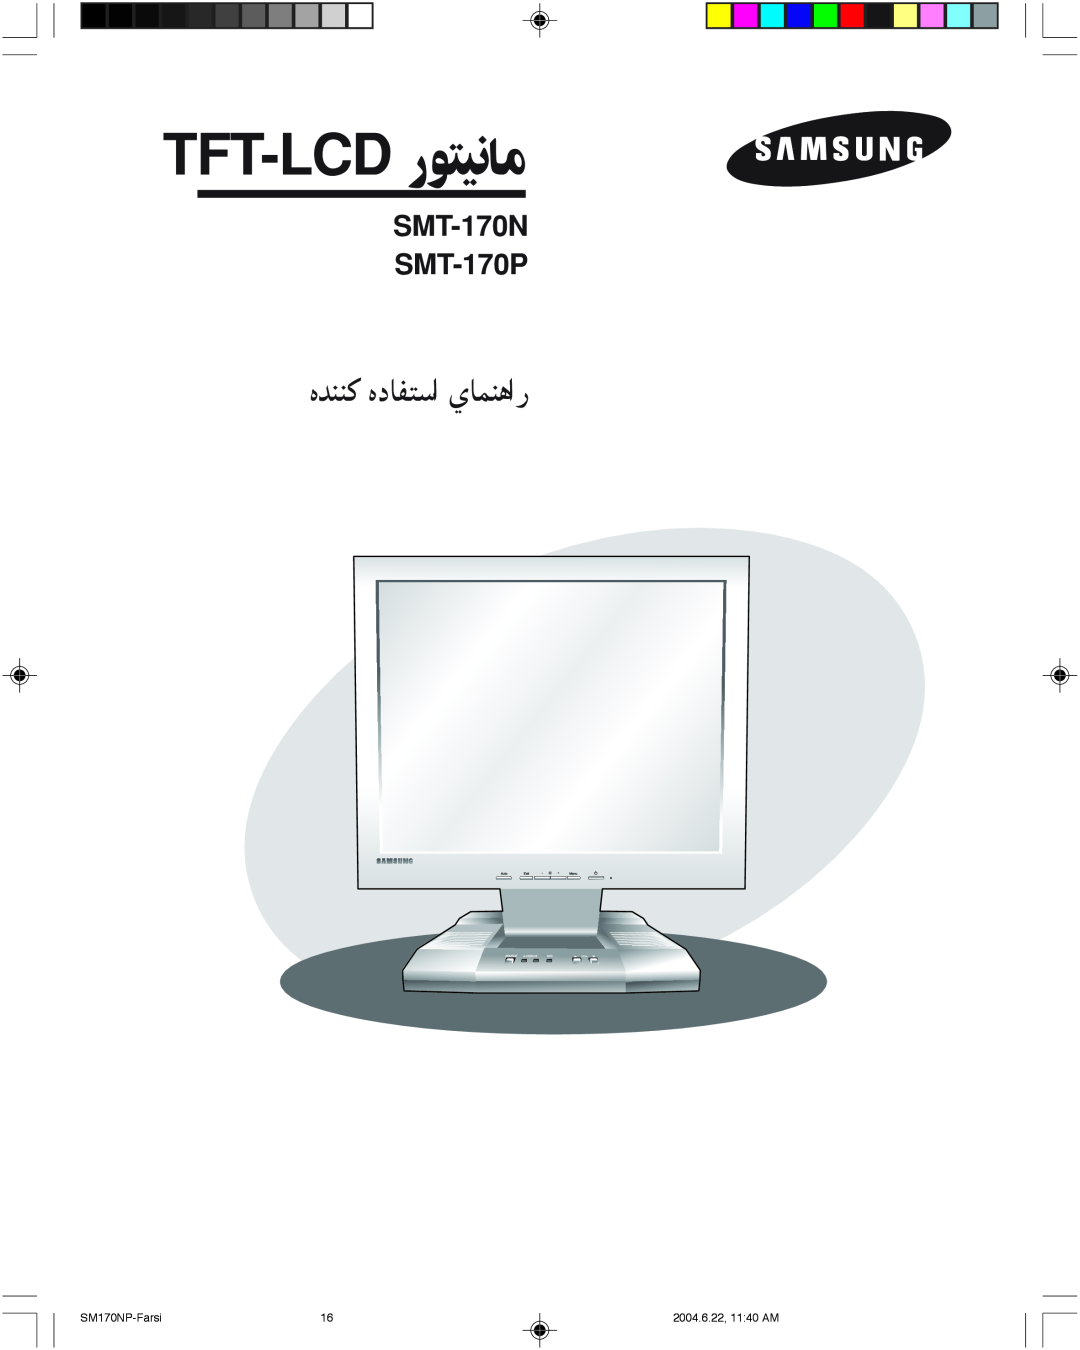 Samsung manual Tft-Lcd Monitor, SMT-170N SMT-170P, User Guide 